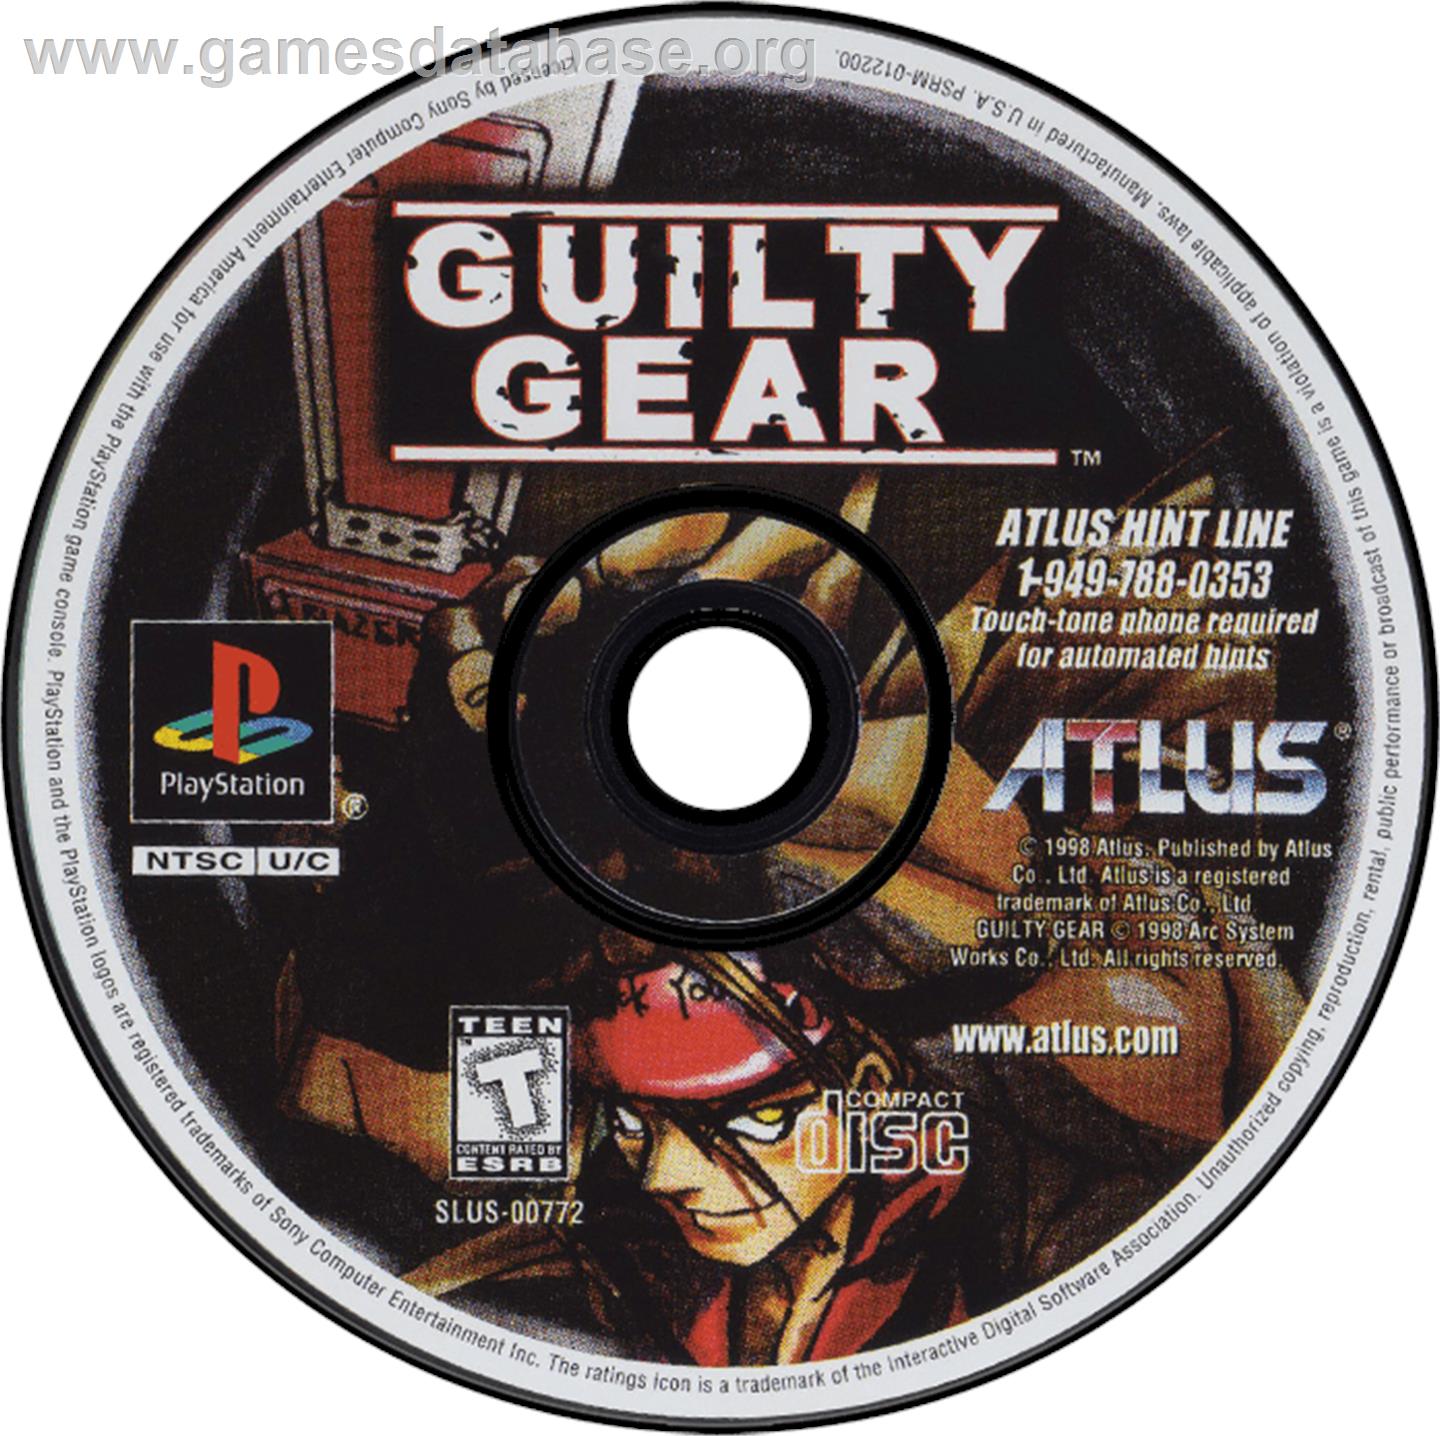 Guilty Gear - Sony Playstation - Artwork - Disc